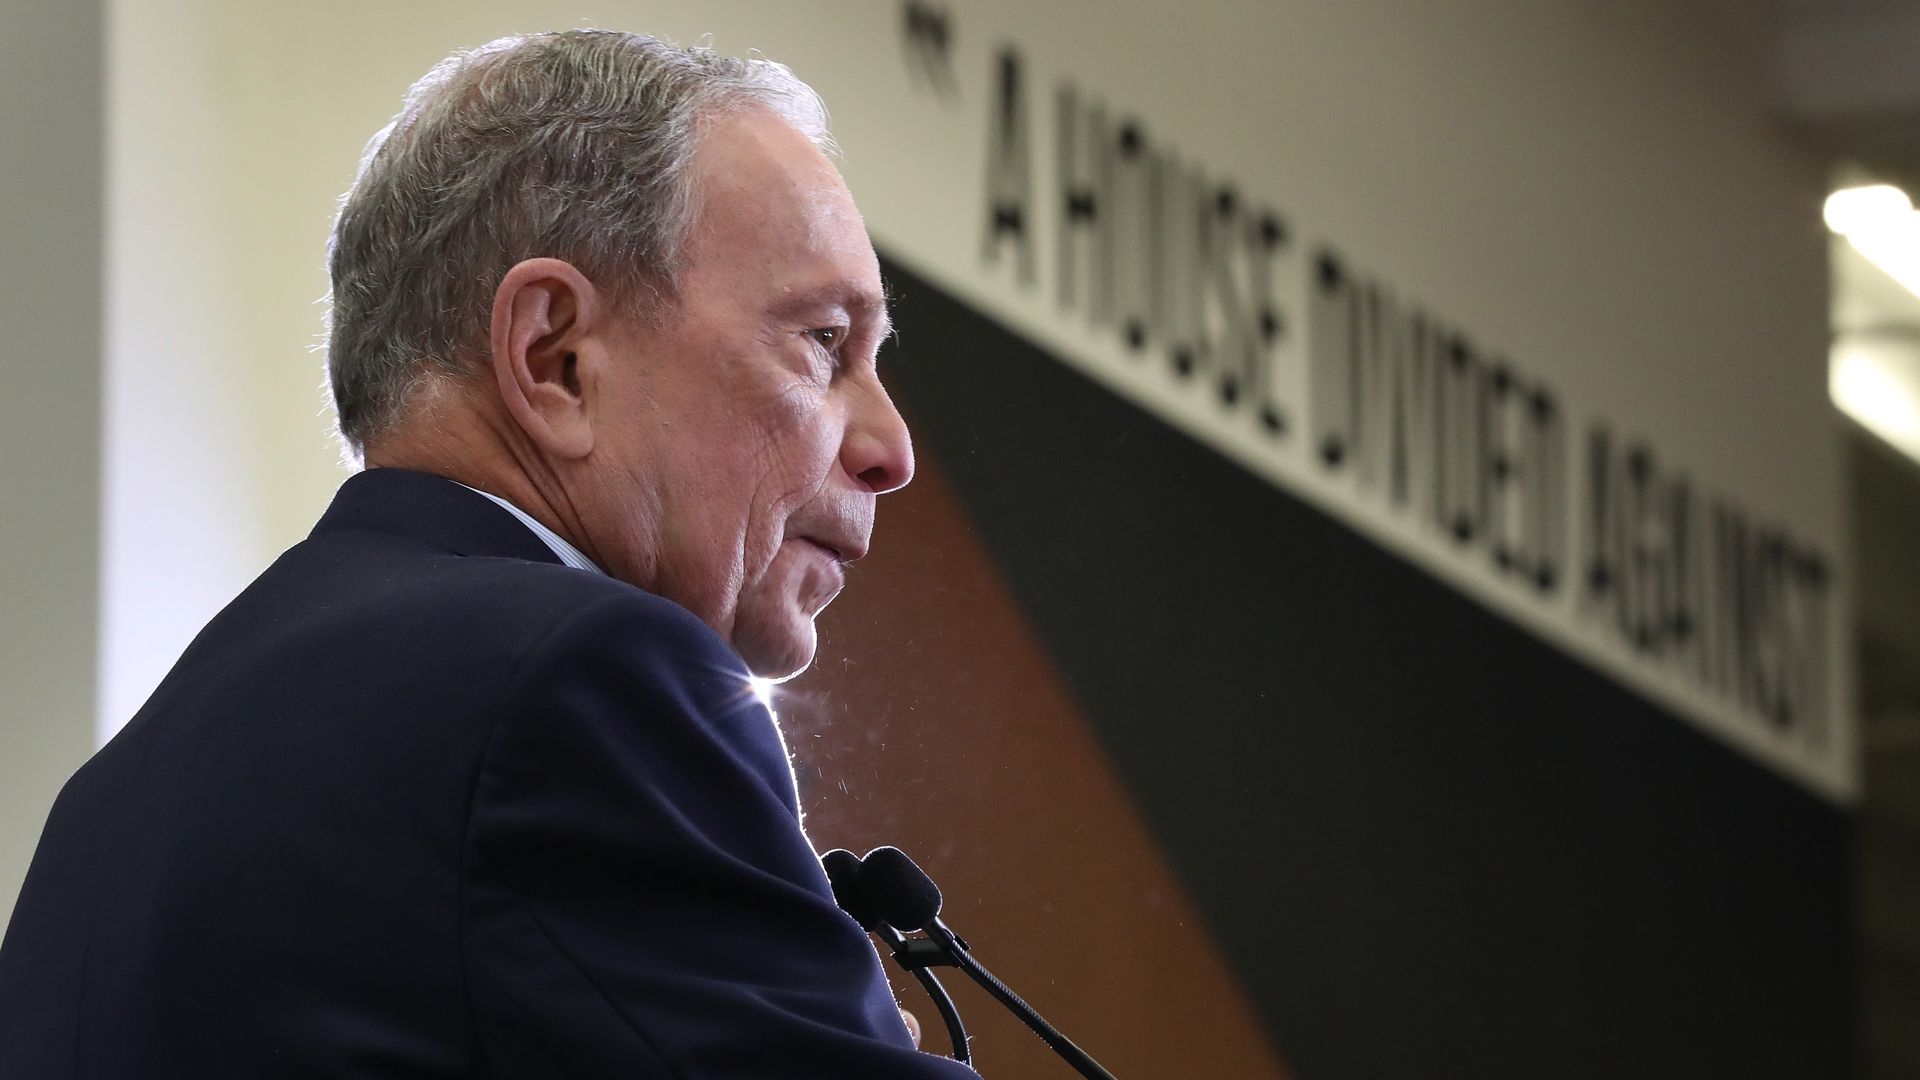 A headshot of Michael Bloomberg.